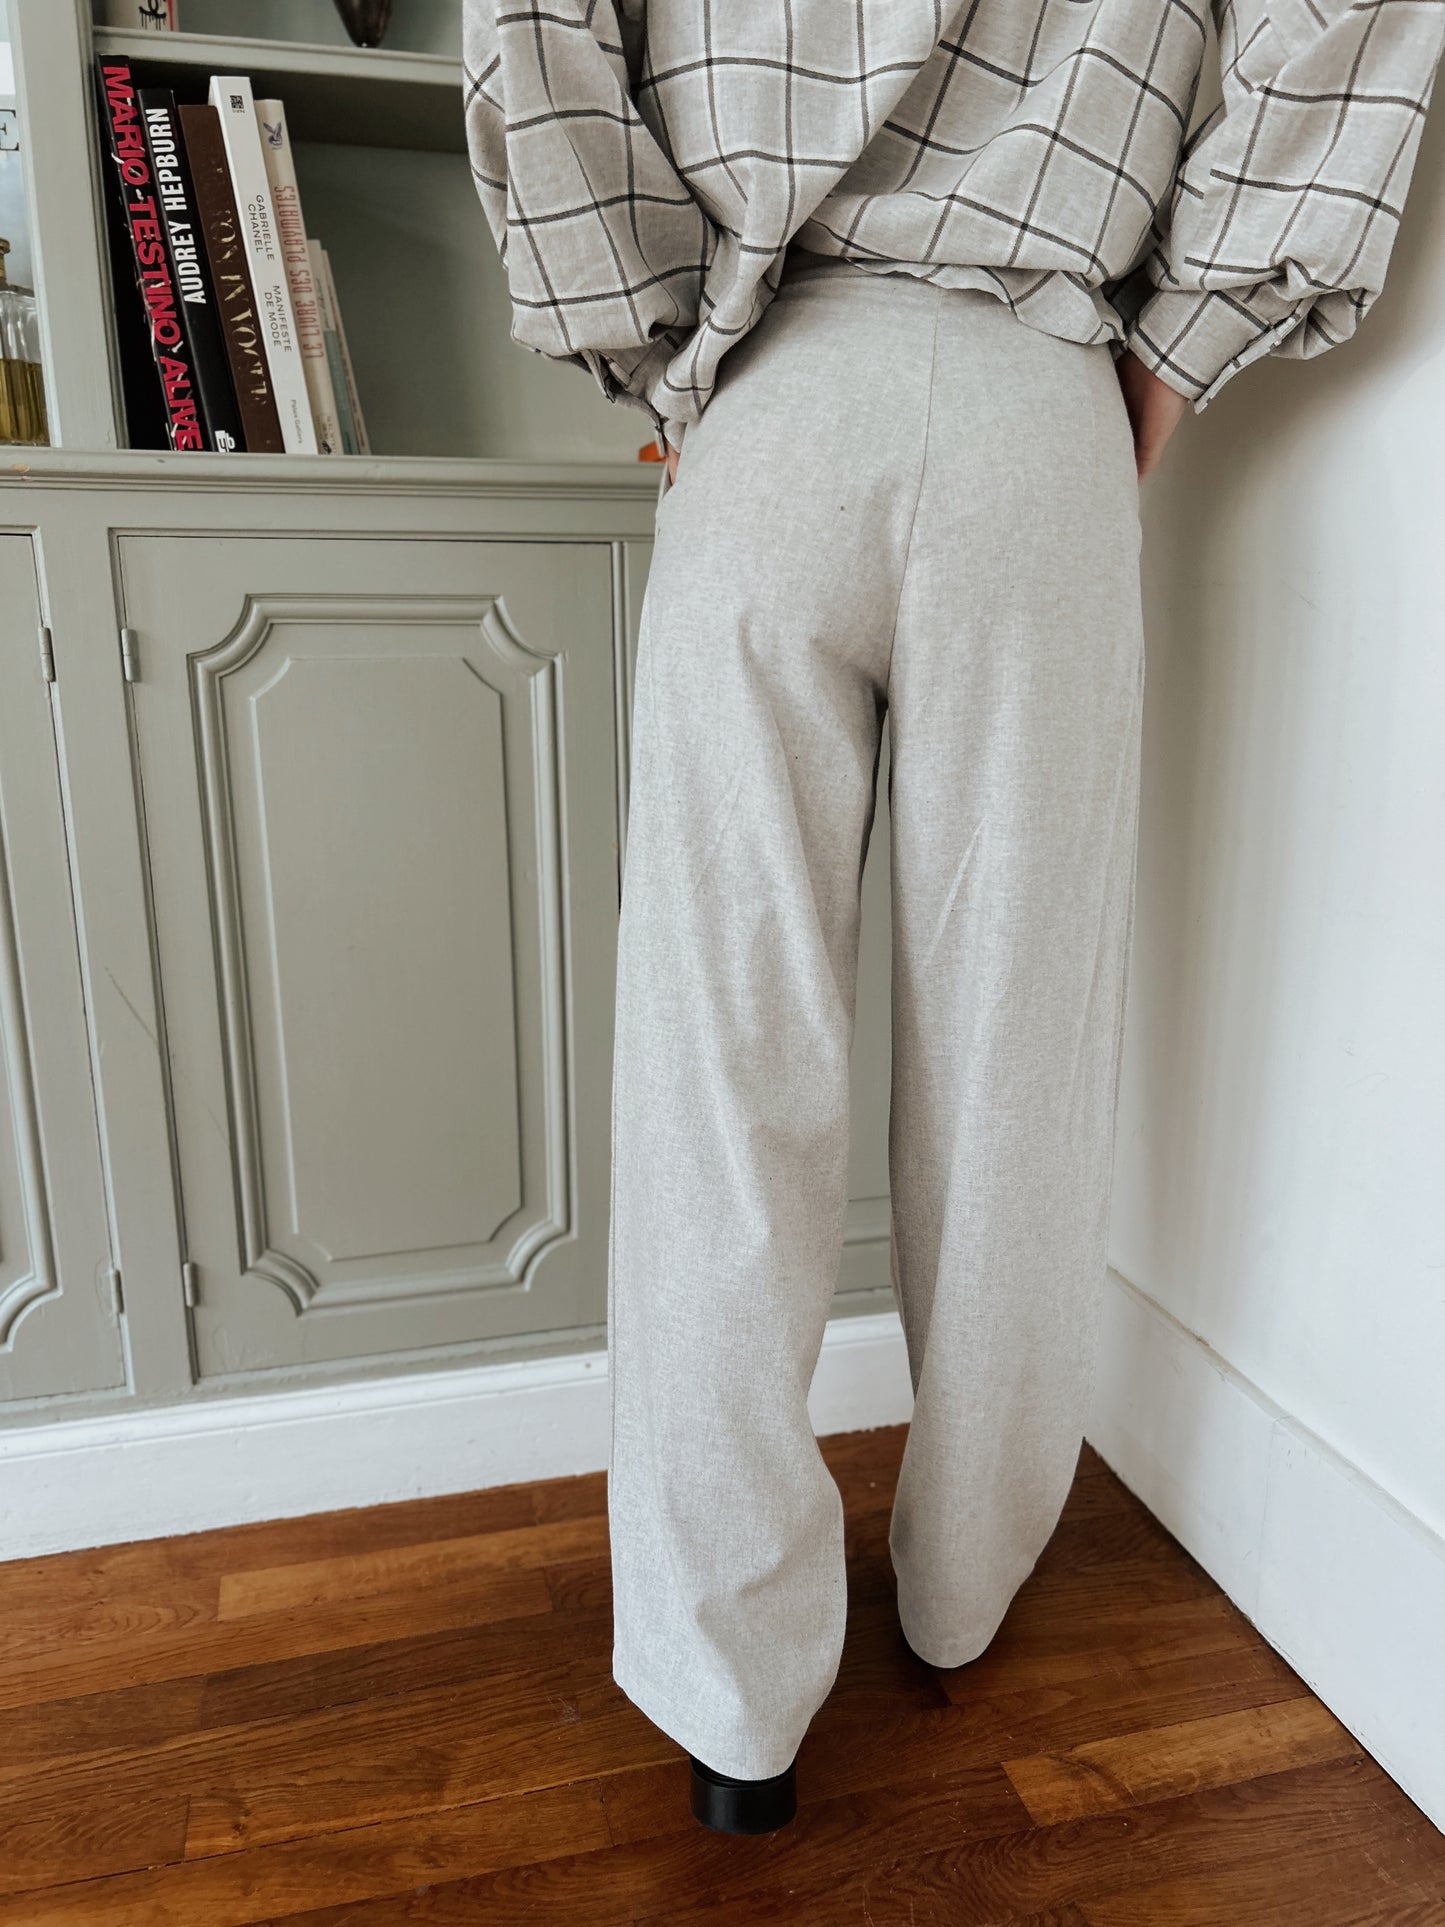 Leon pants - gray